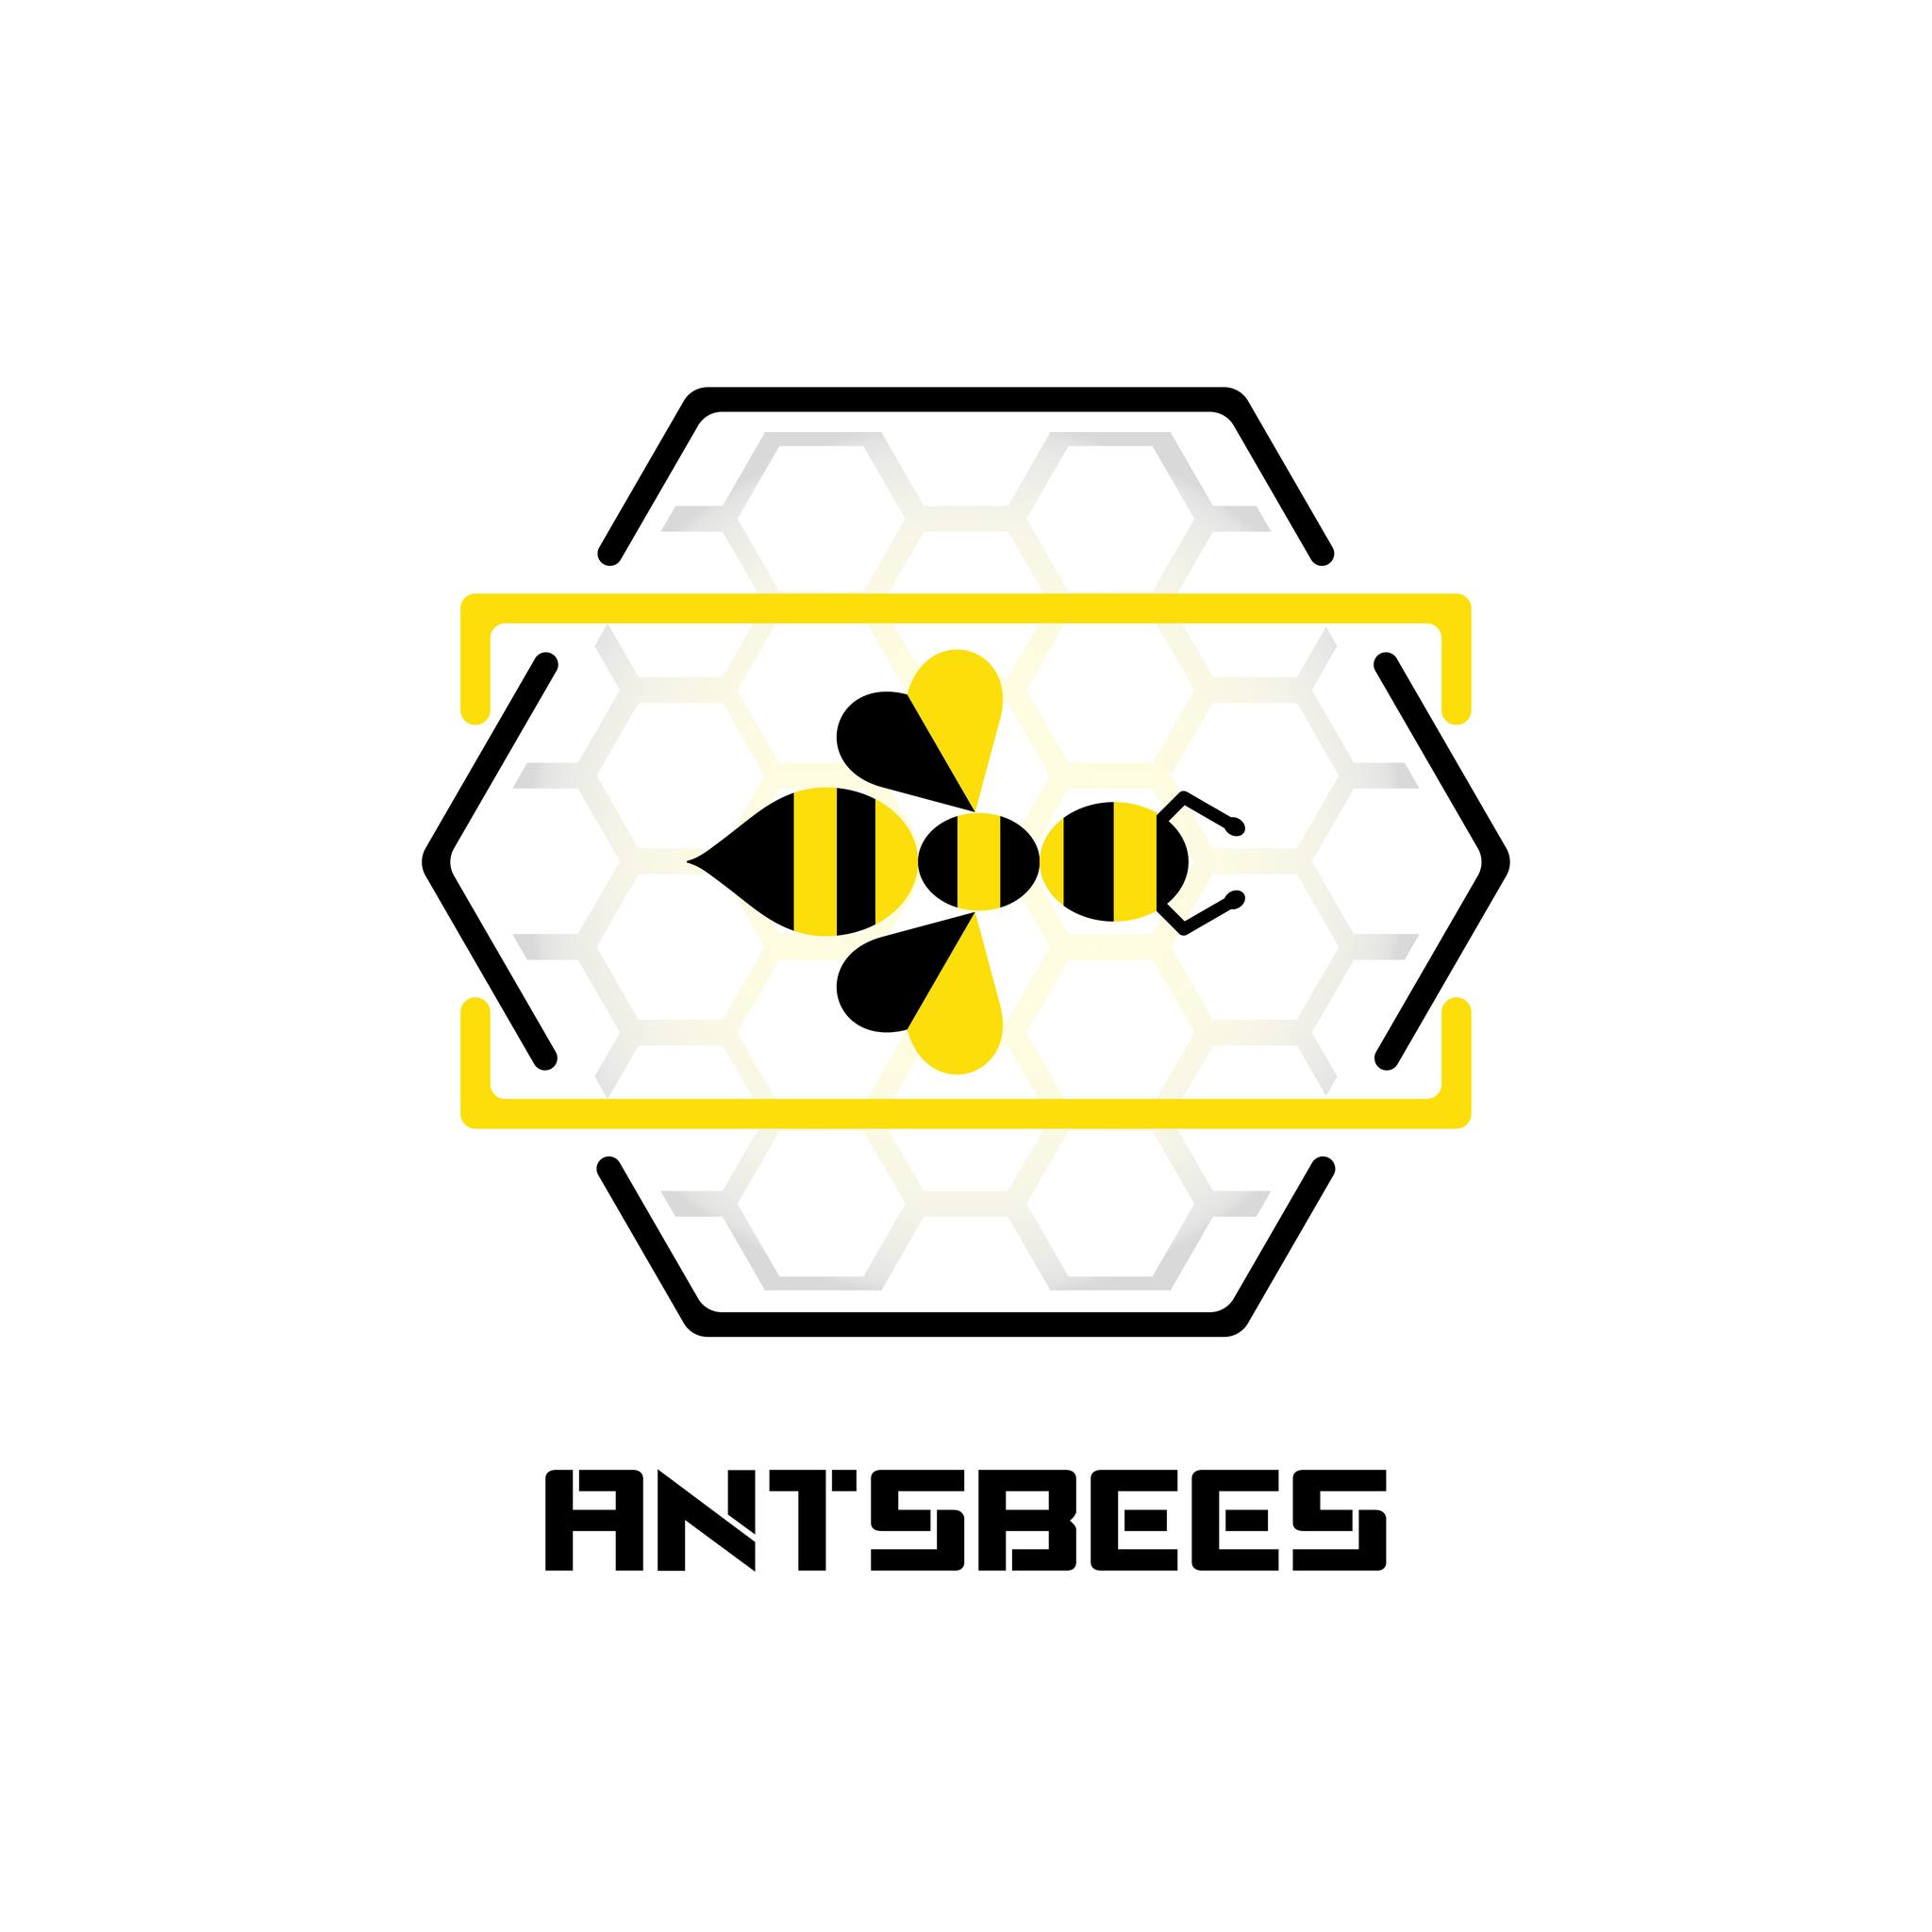 MOU - Antsbees Sdn. Bhd.